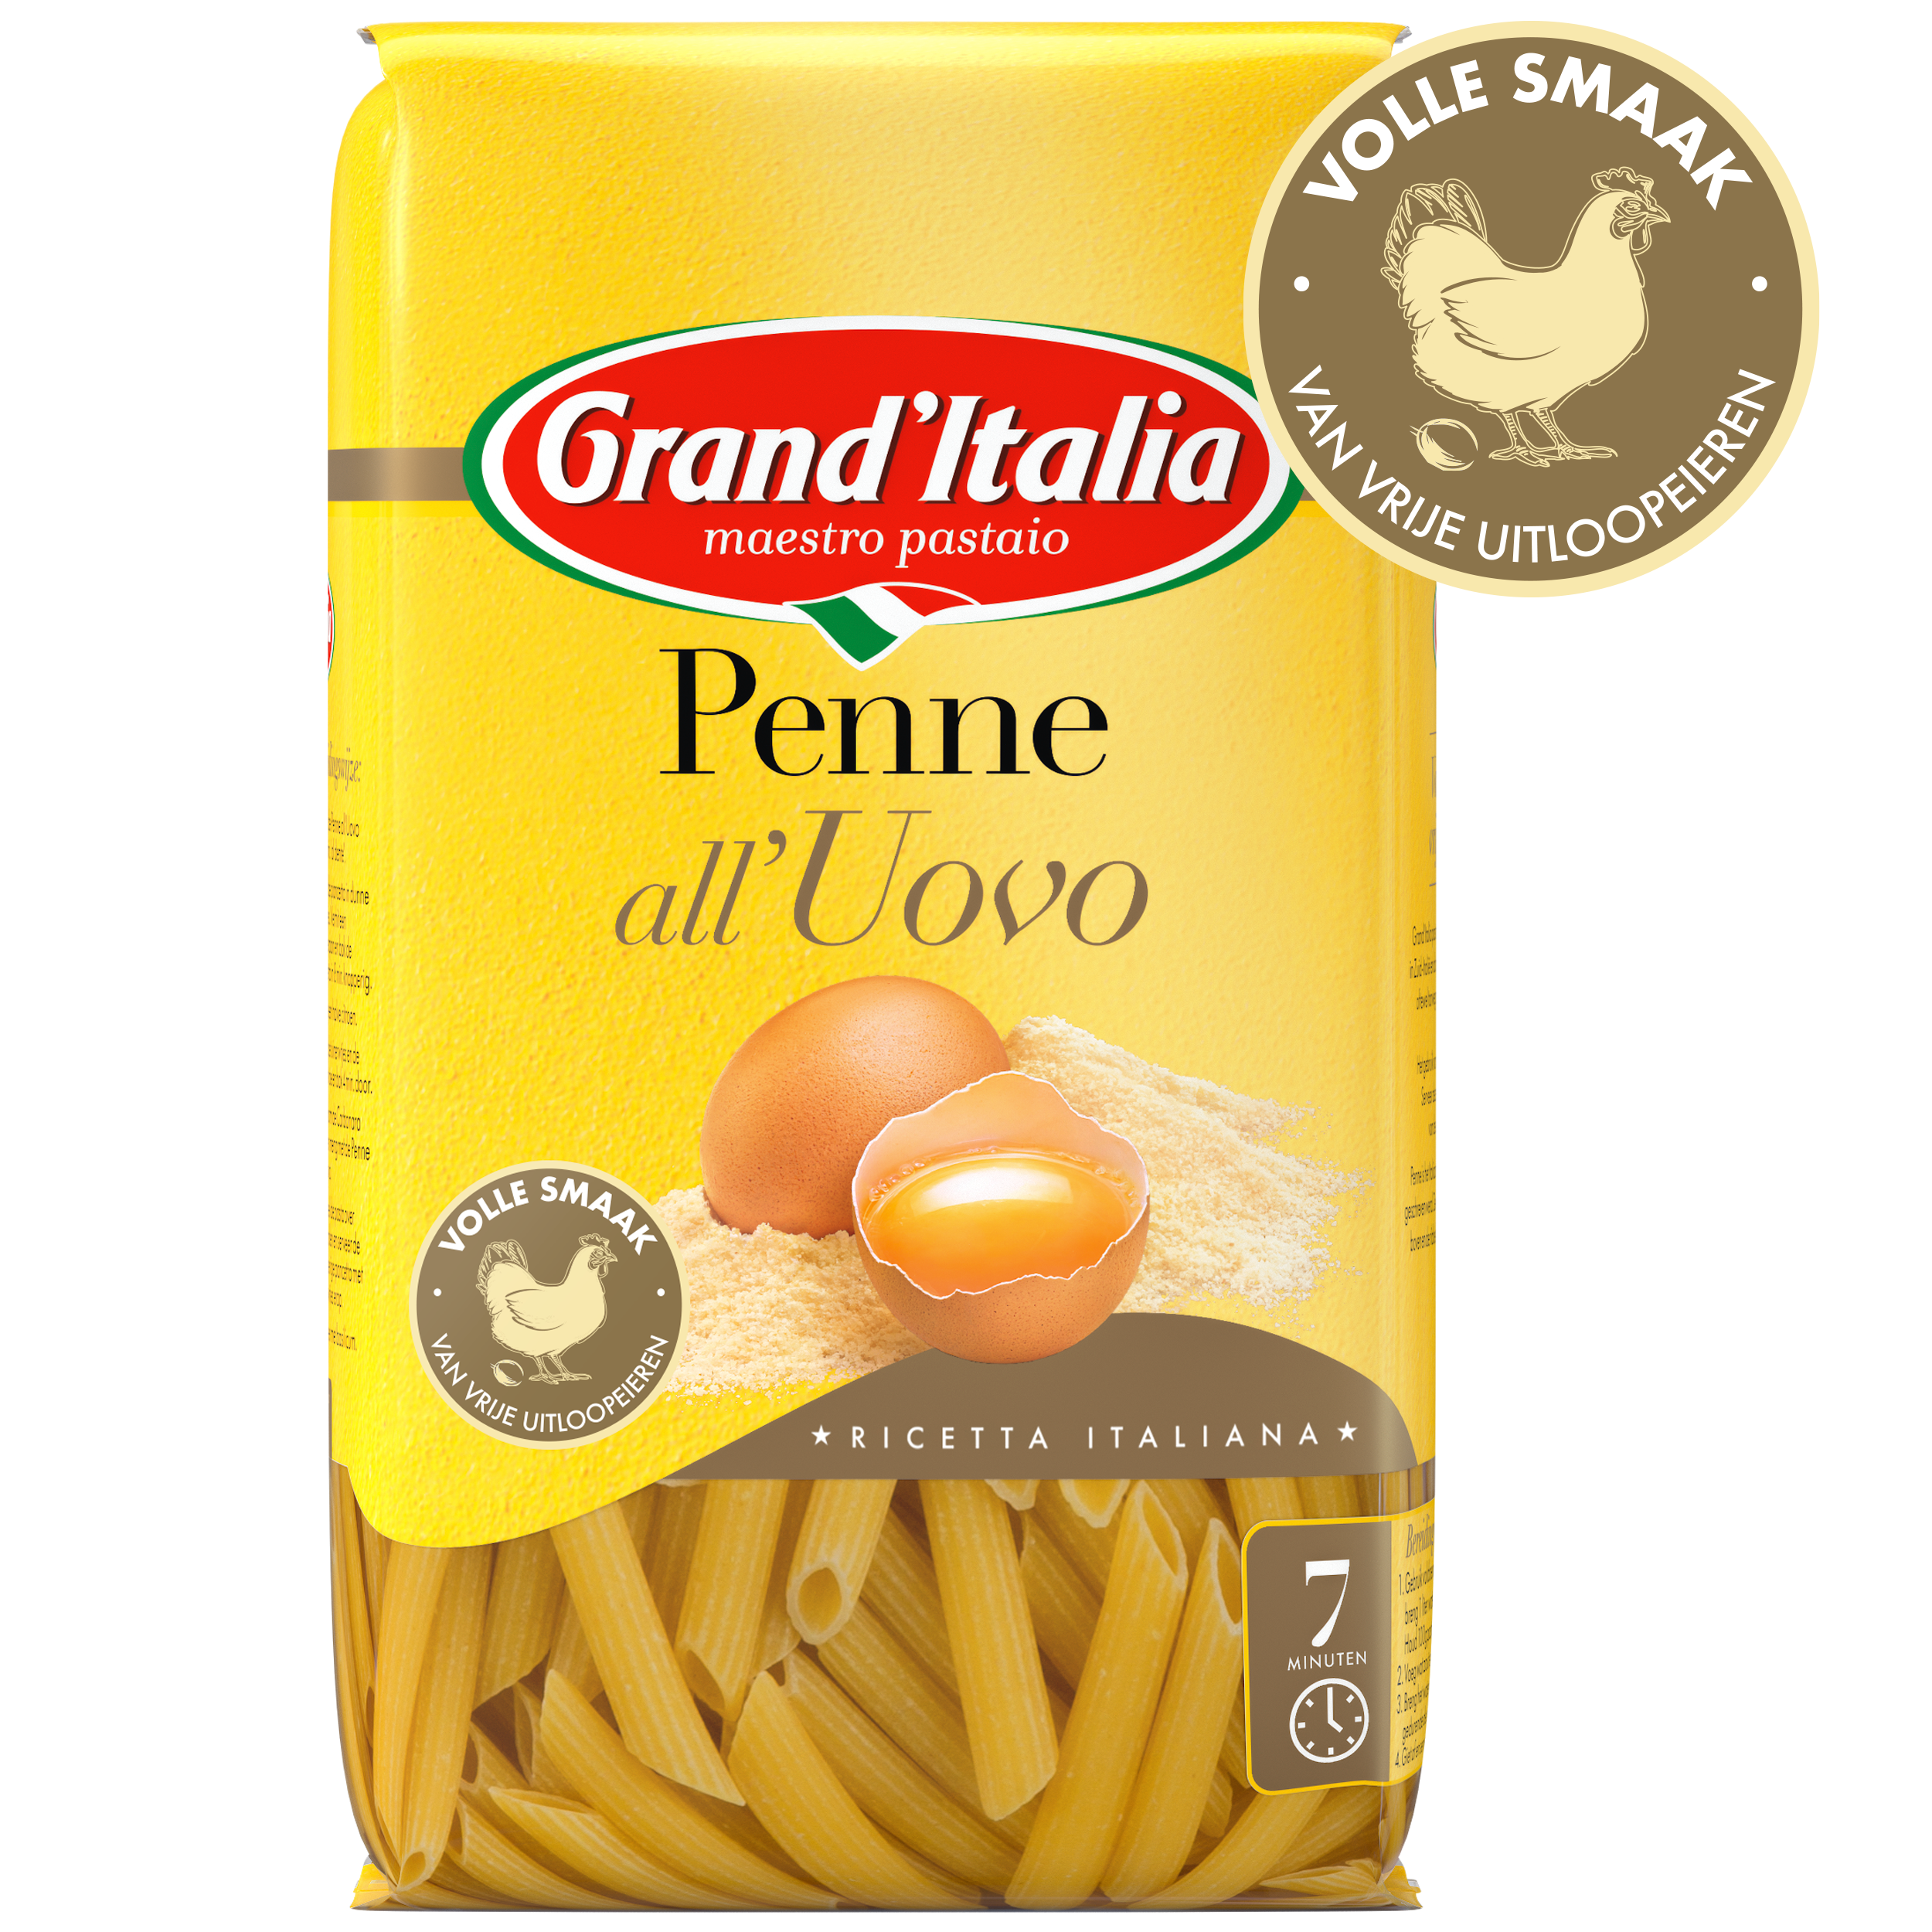 Pasta Penne all'Uovo 500g claim Grand'Italia